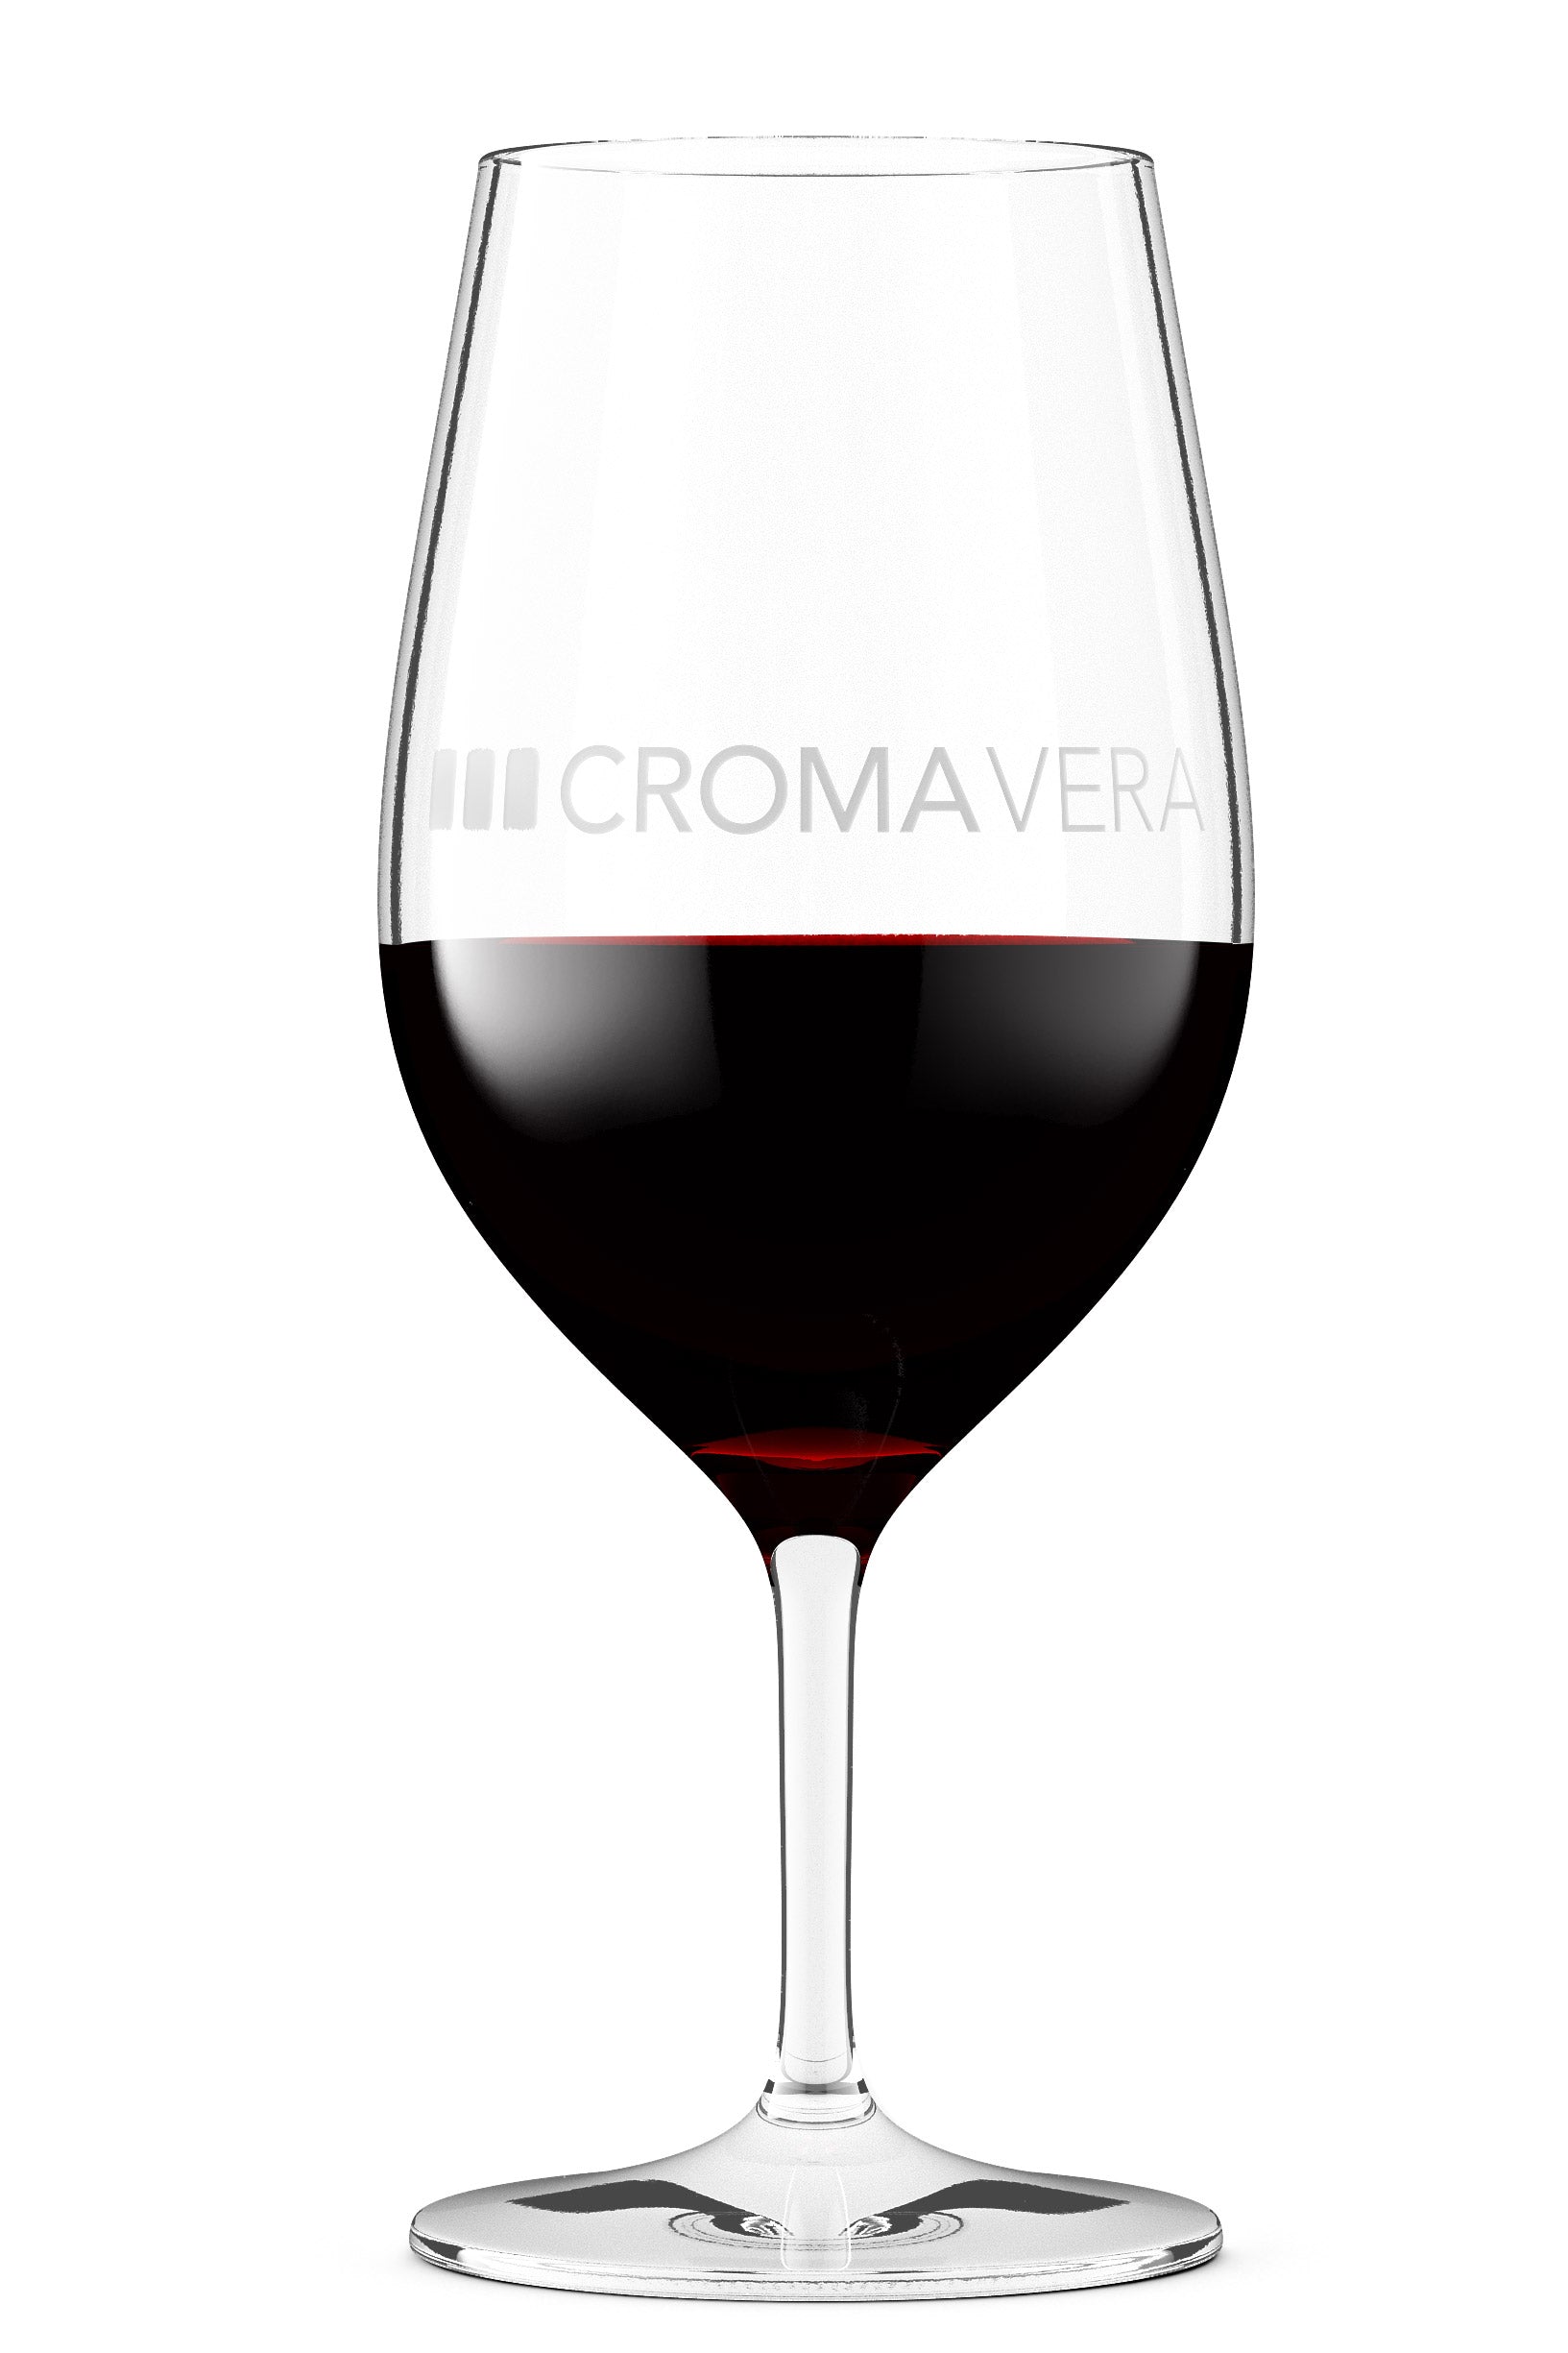 Croma Vera Revelación red blend in a wine glass